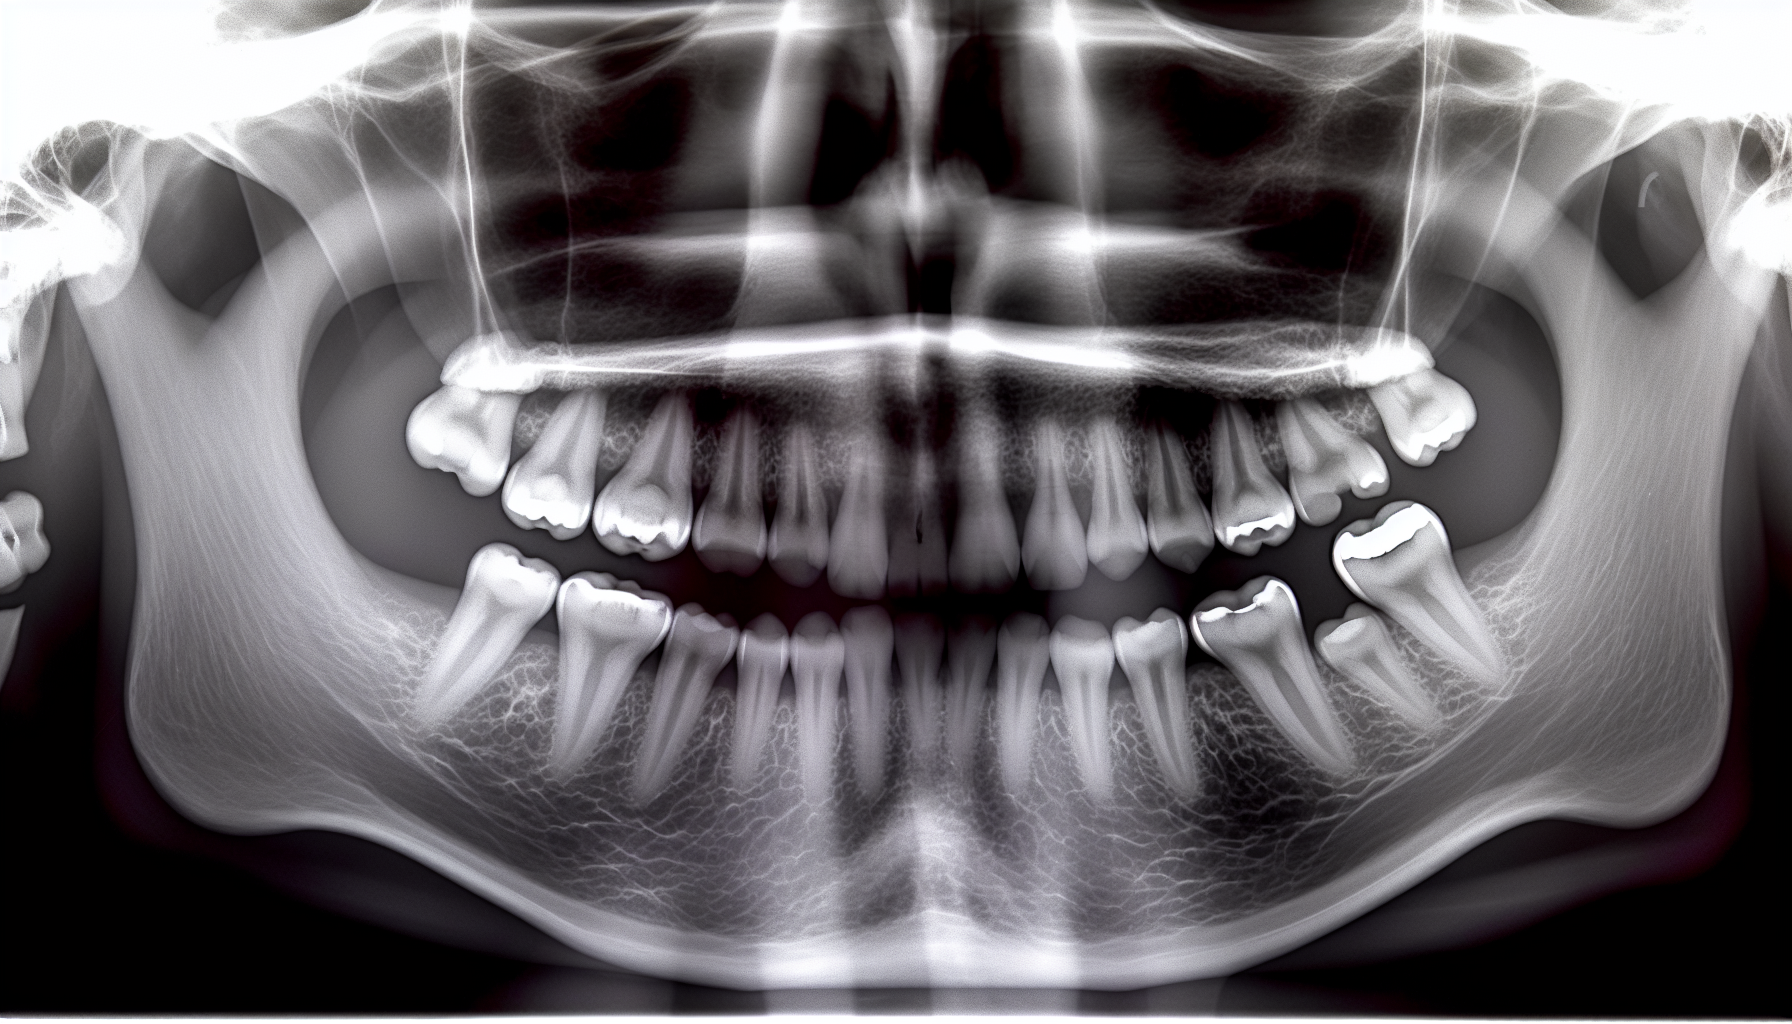 Photo of a dental X-ray